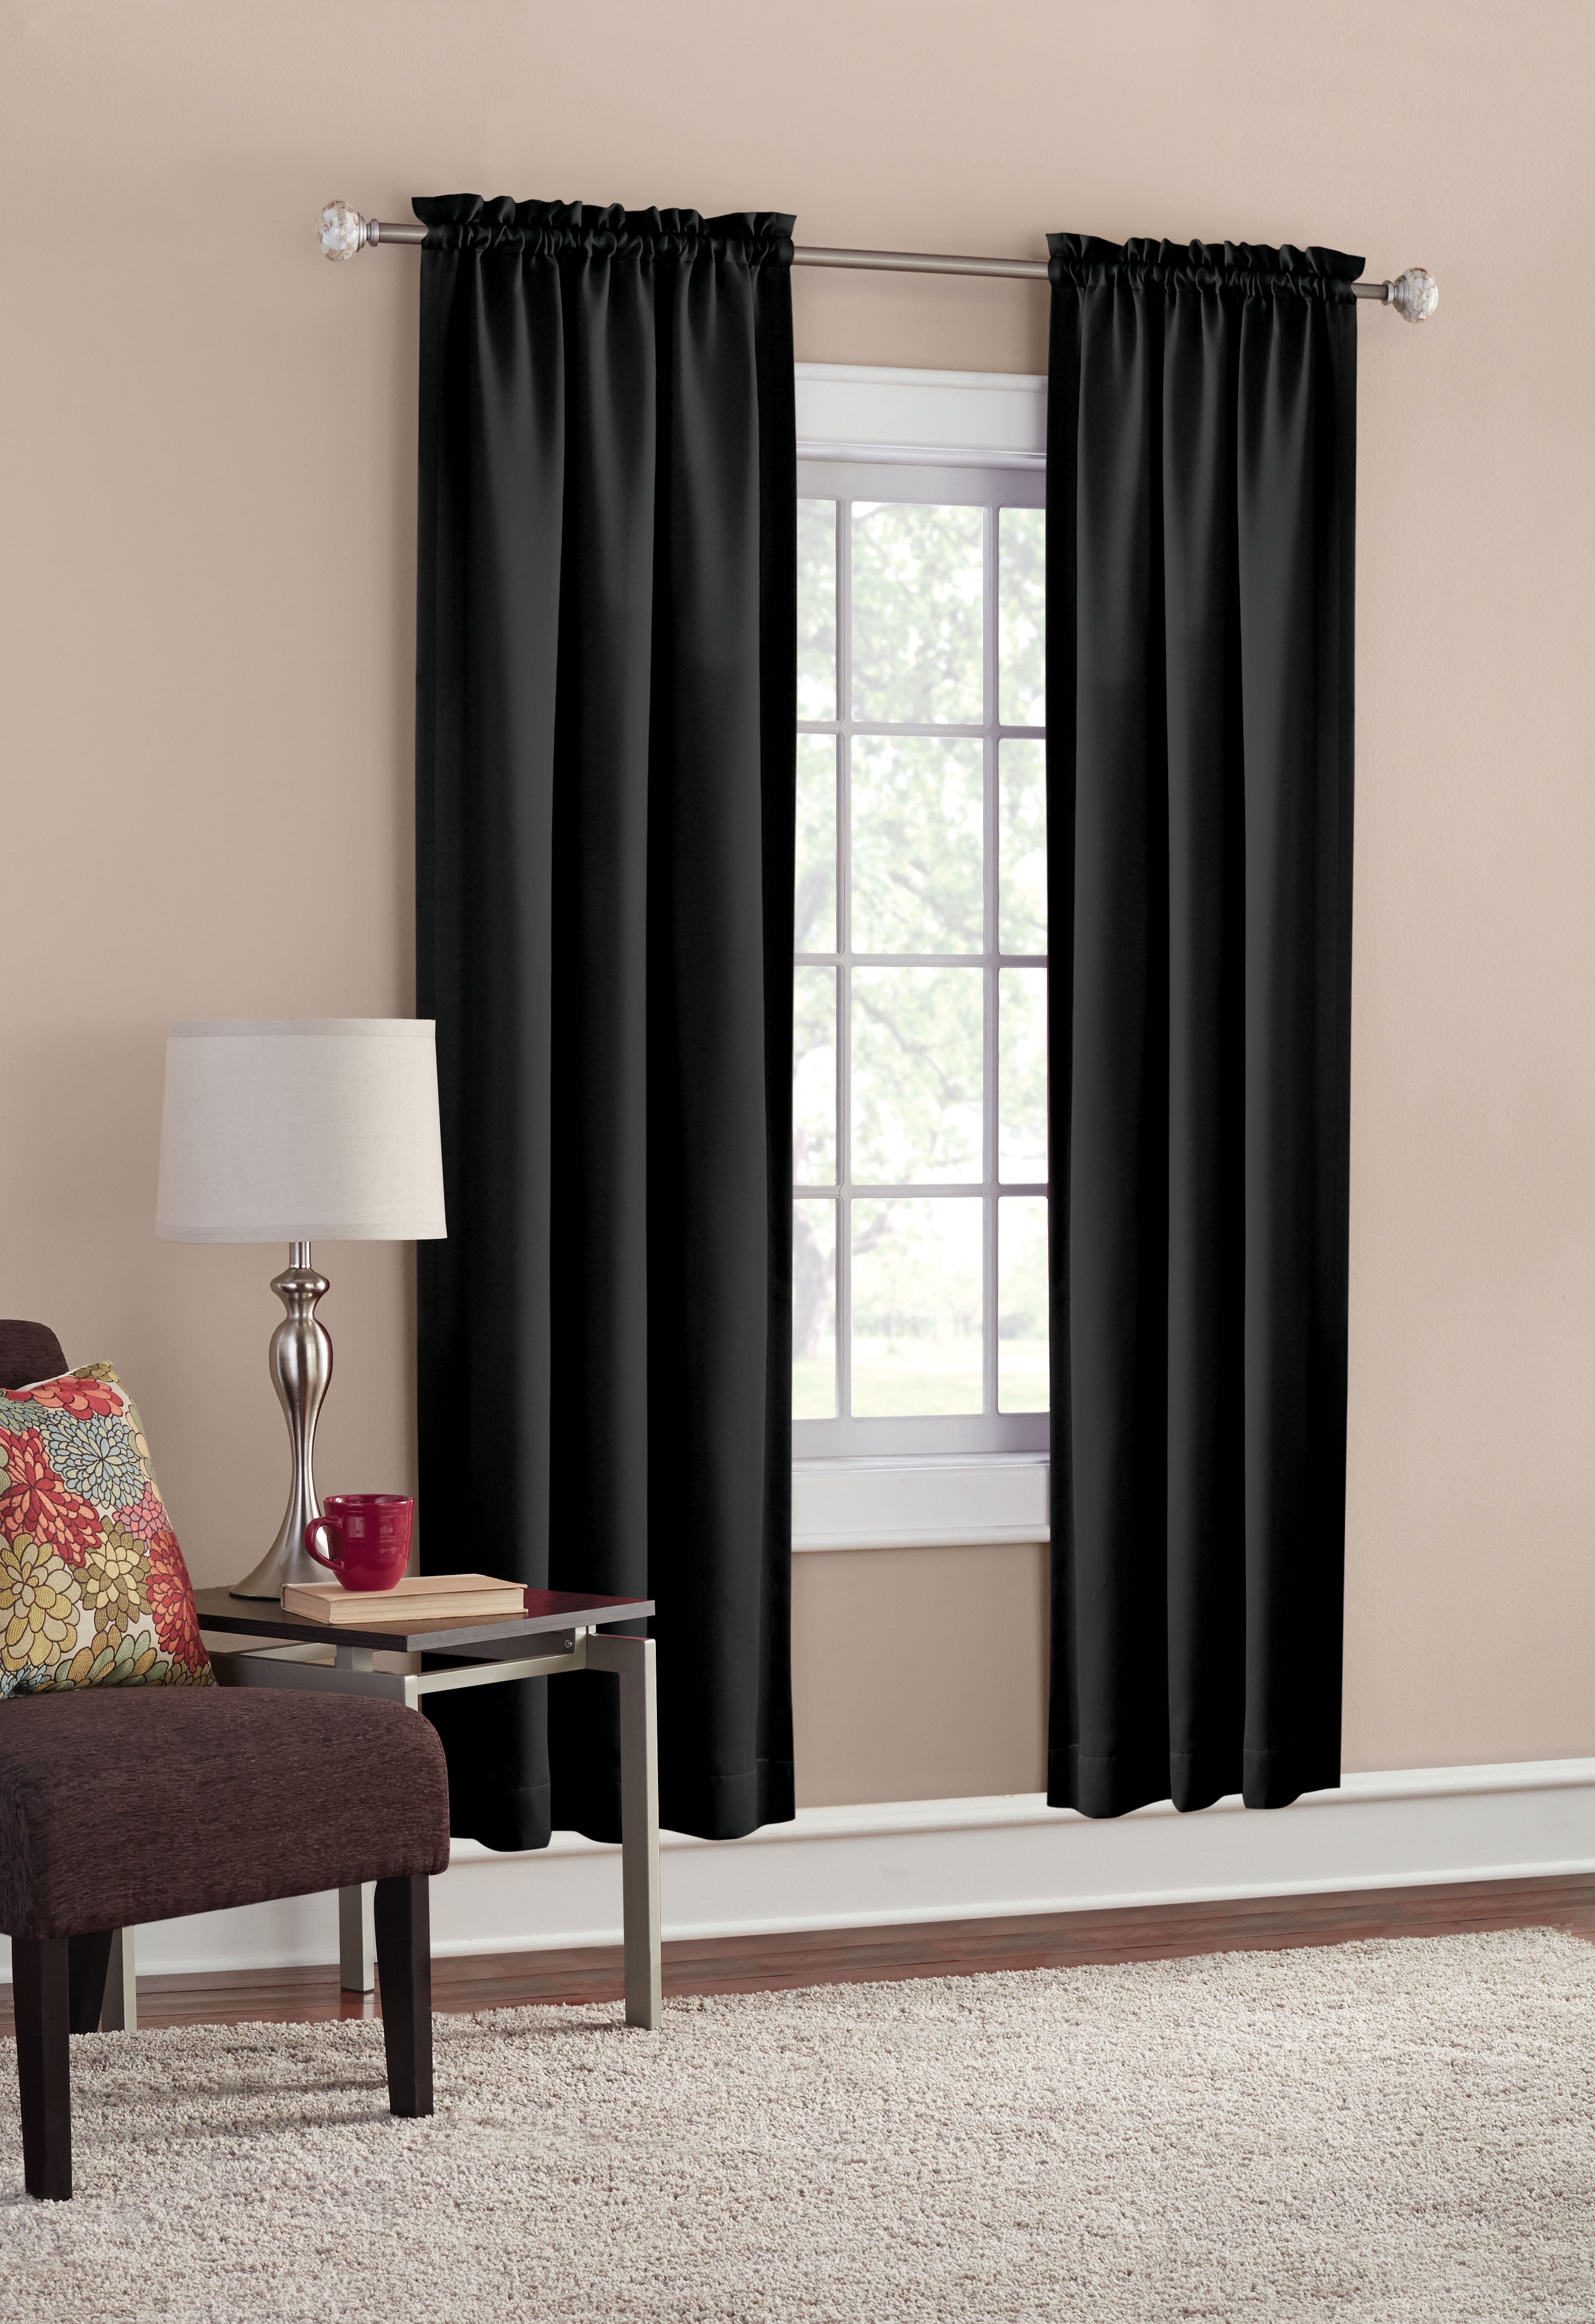 Mainstays Solid Color Room Darkening Rod Pocket Curtain Panel Pair, Set of 2, Black, 30 x 84